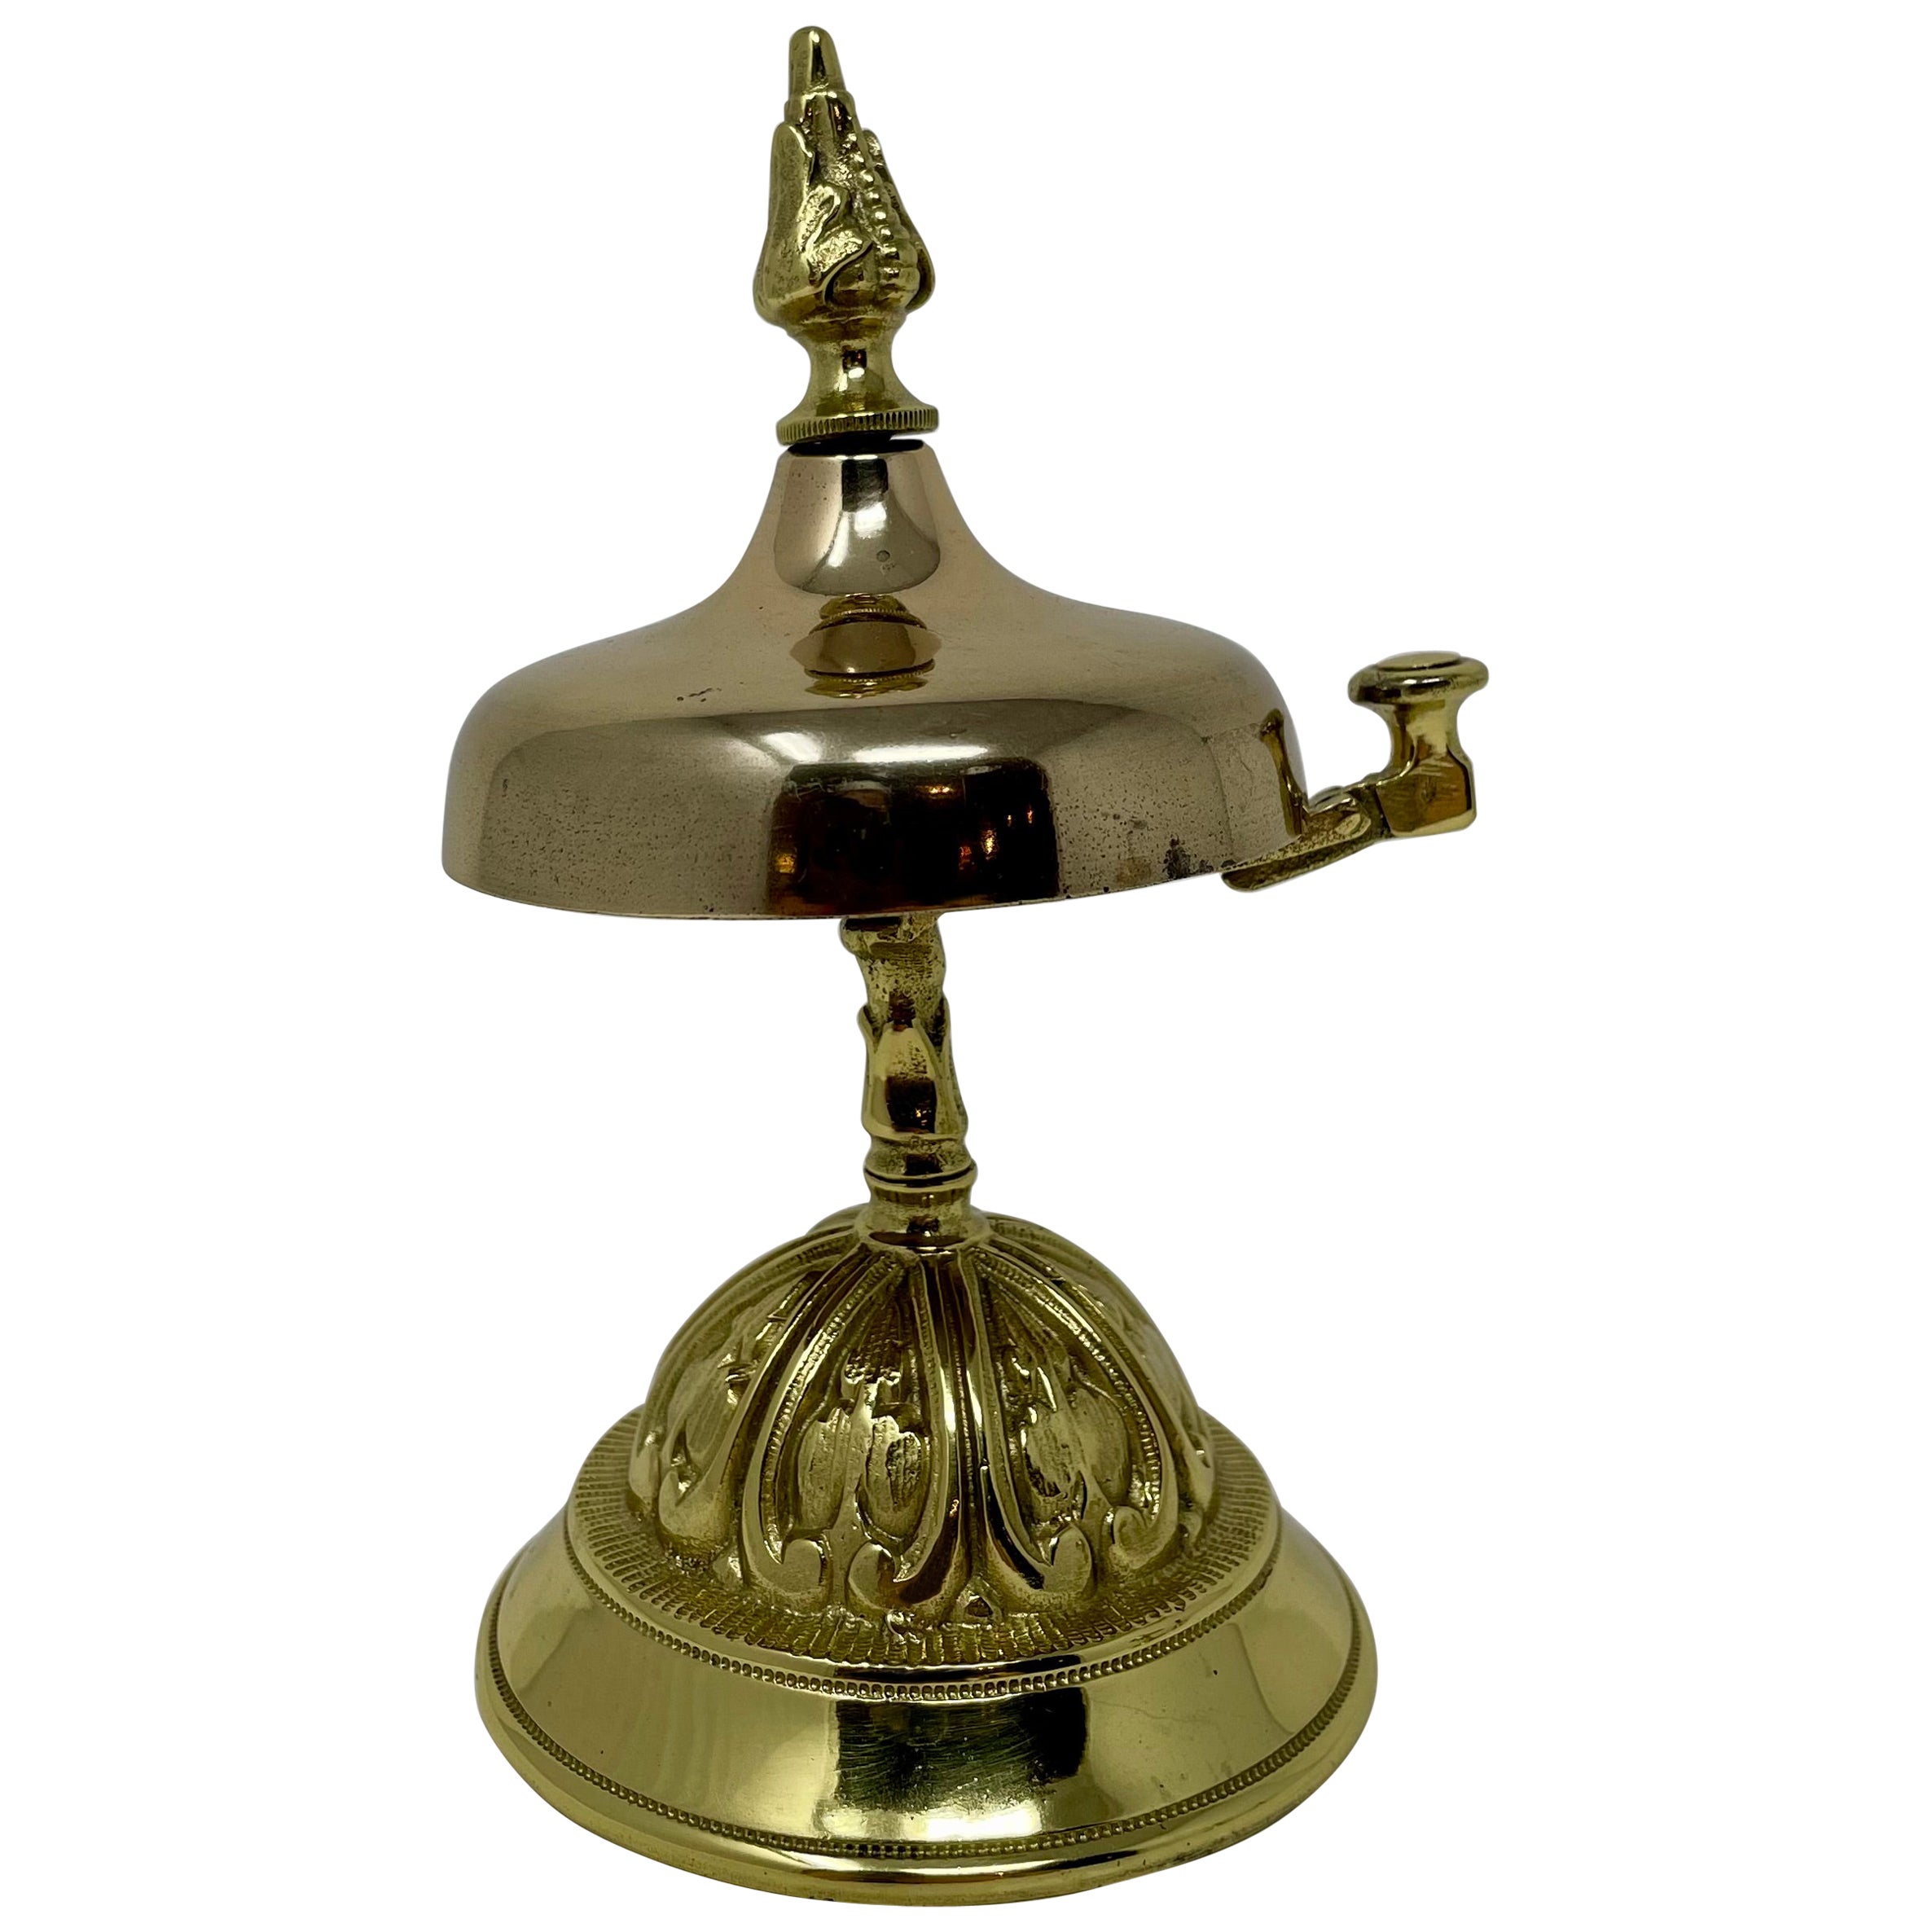 Antique English Victorian Brass Desk Bell, Circa 1880-1890.